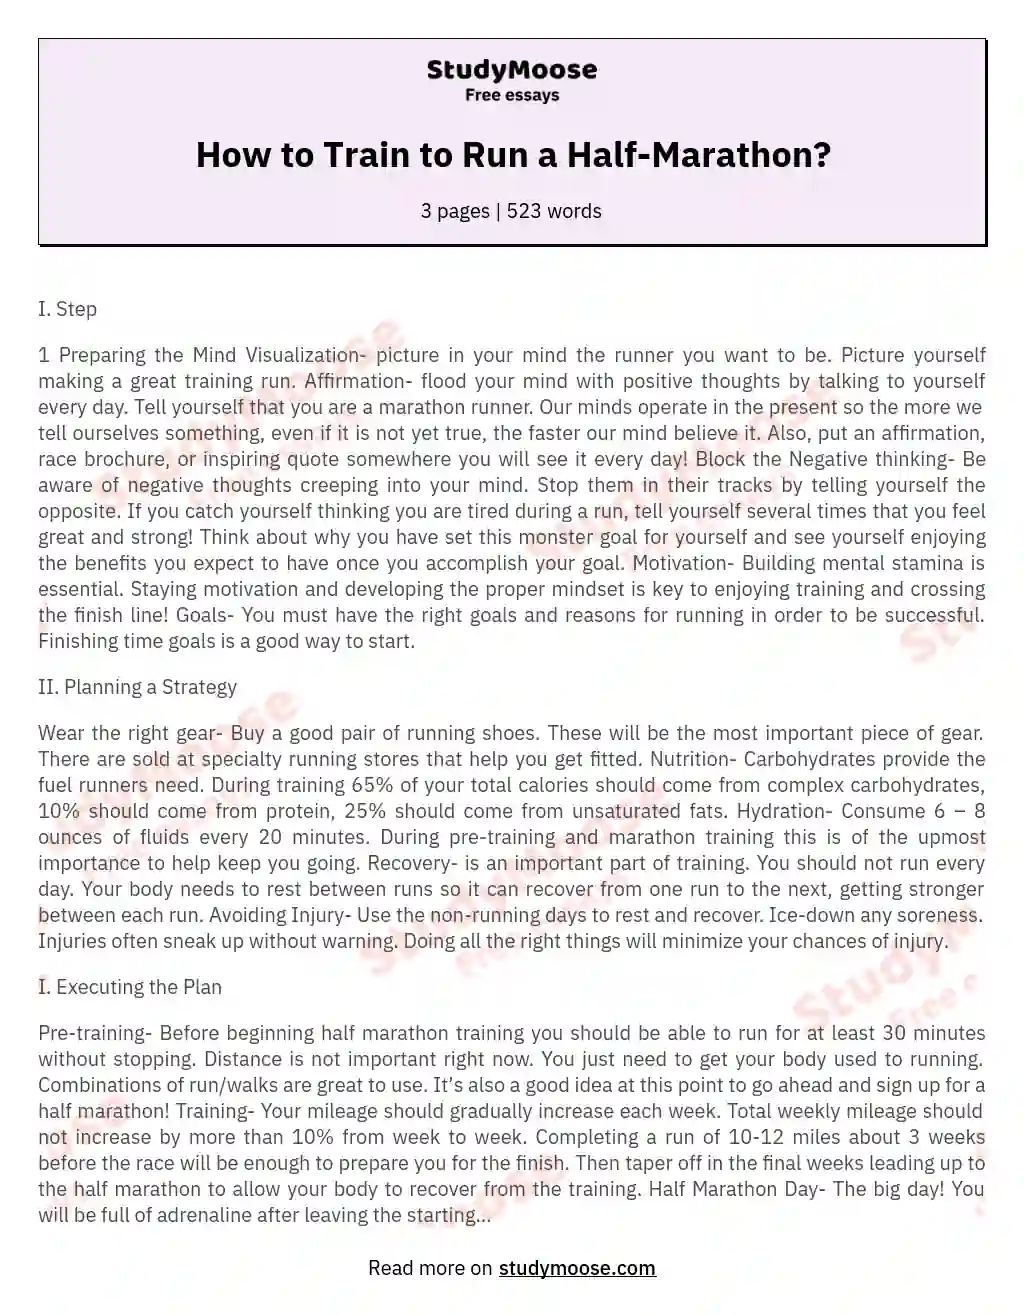 essay on running a marathon